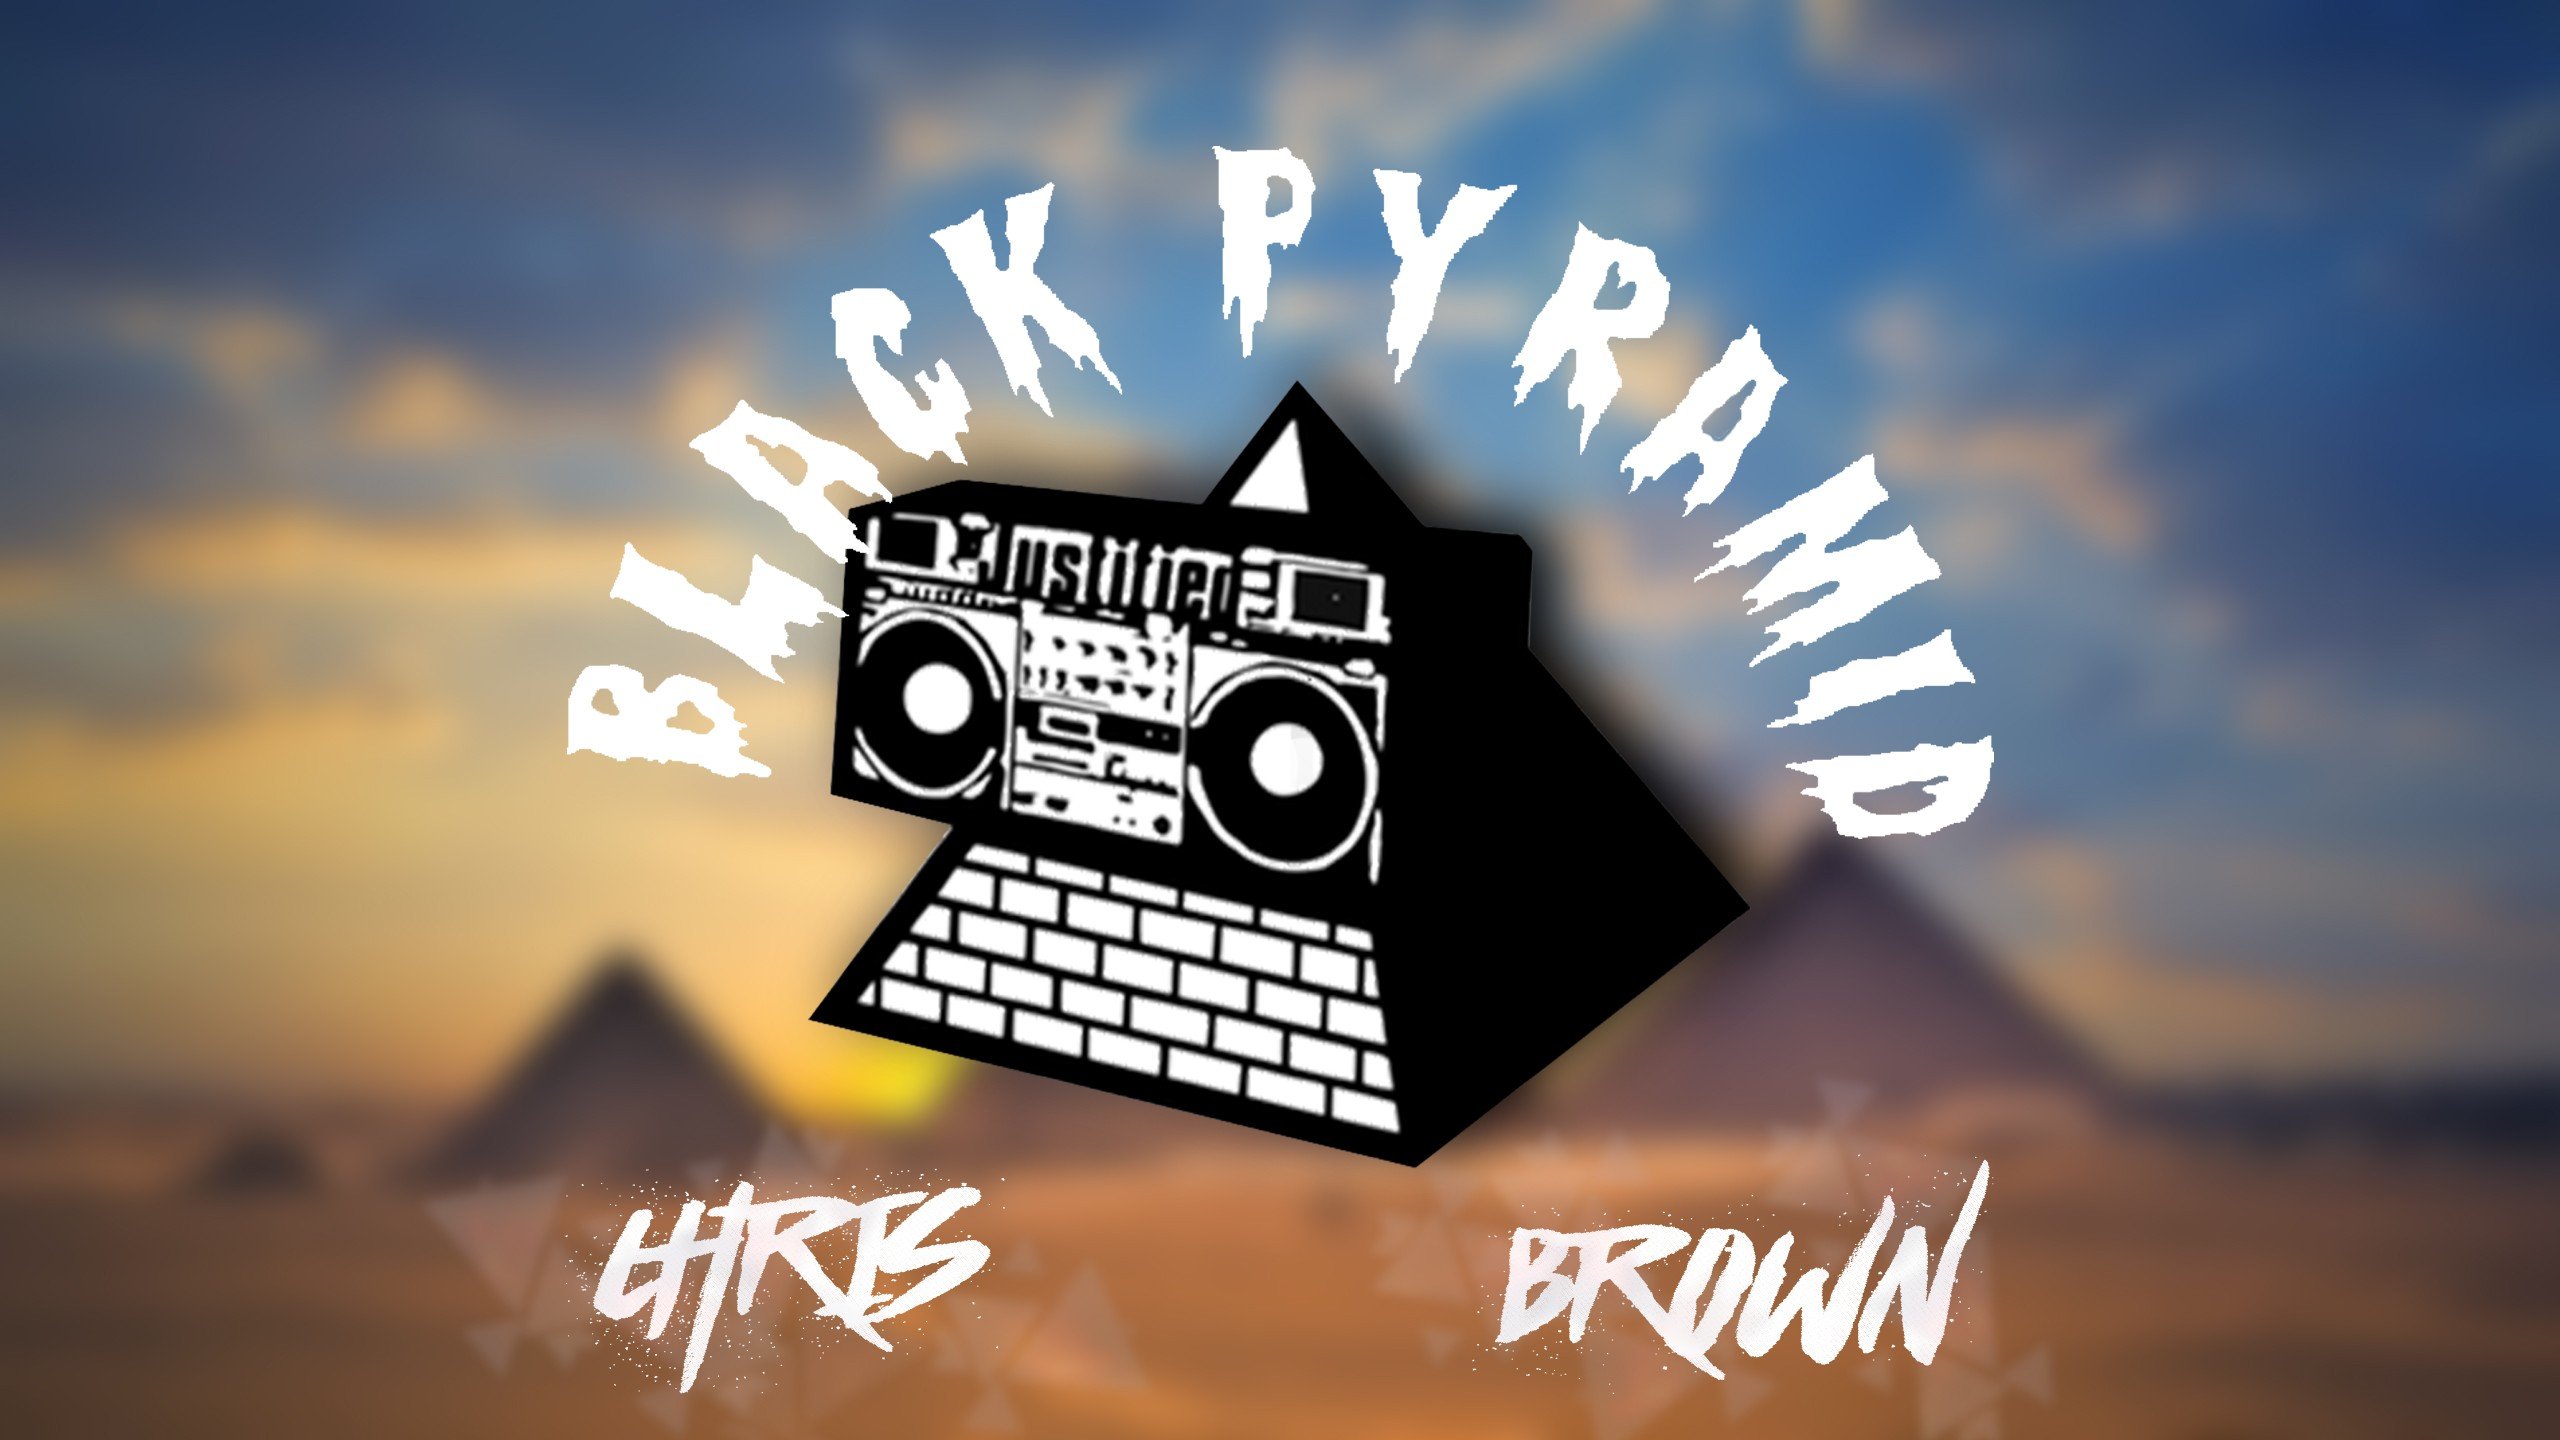 black pyramid, Chris brown, Breezy Wallpaper